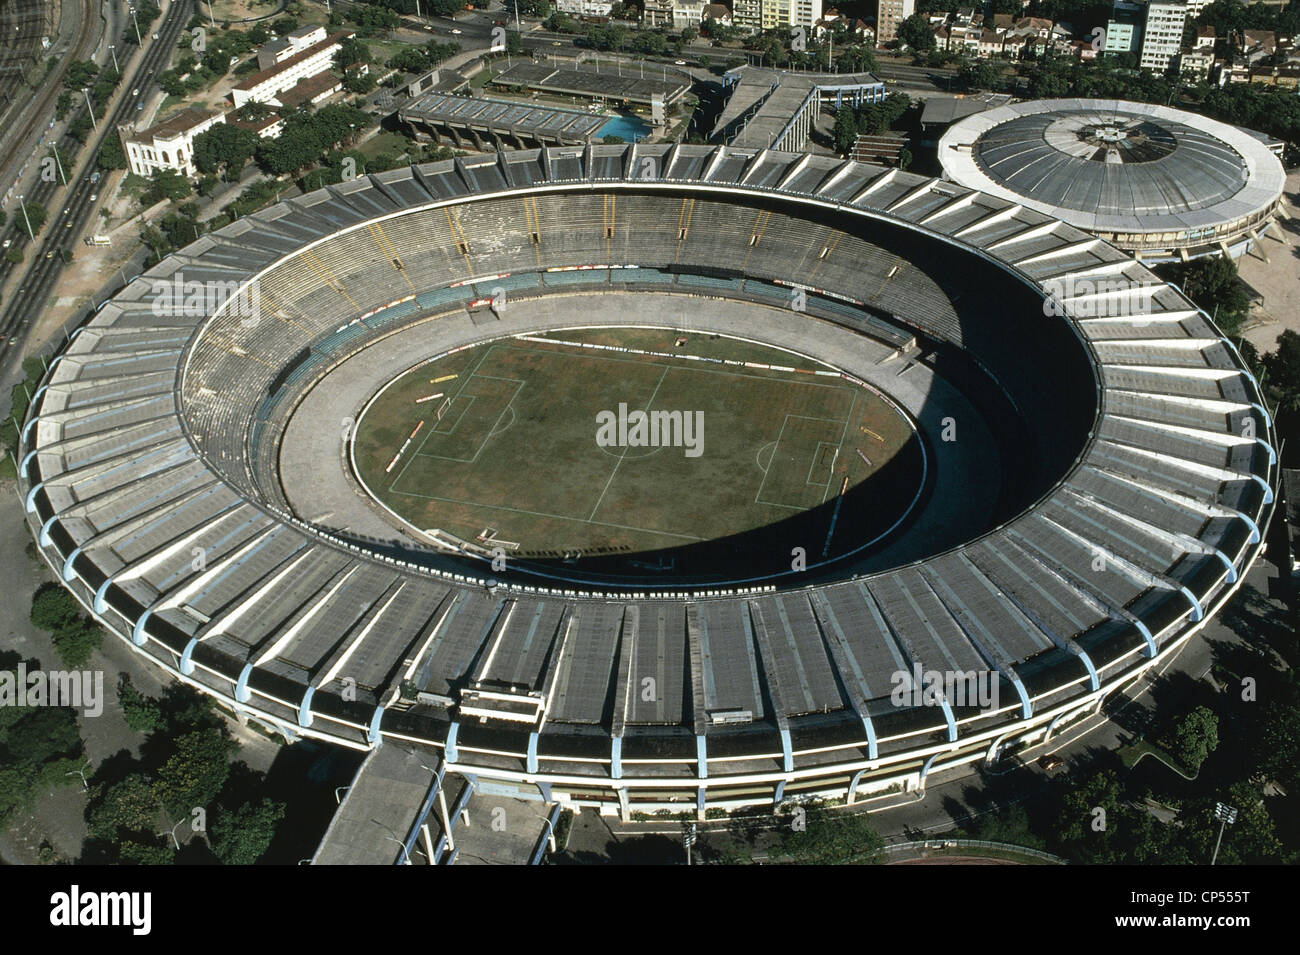 Estádio Maracanã